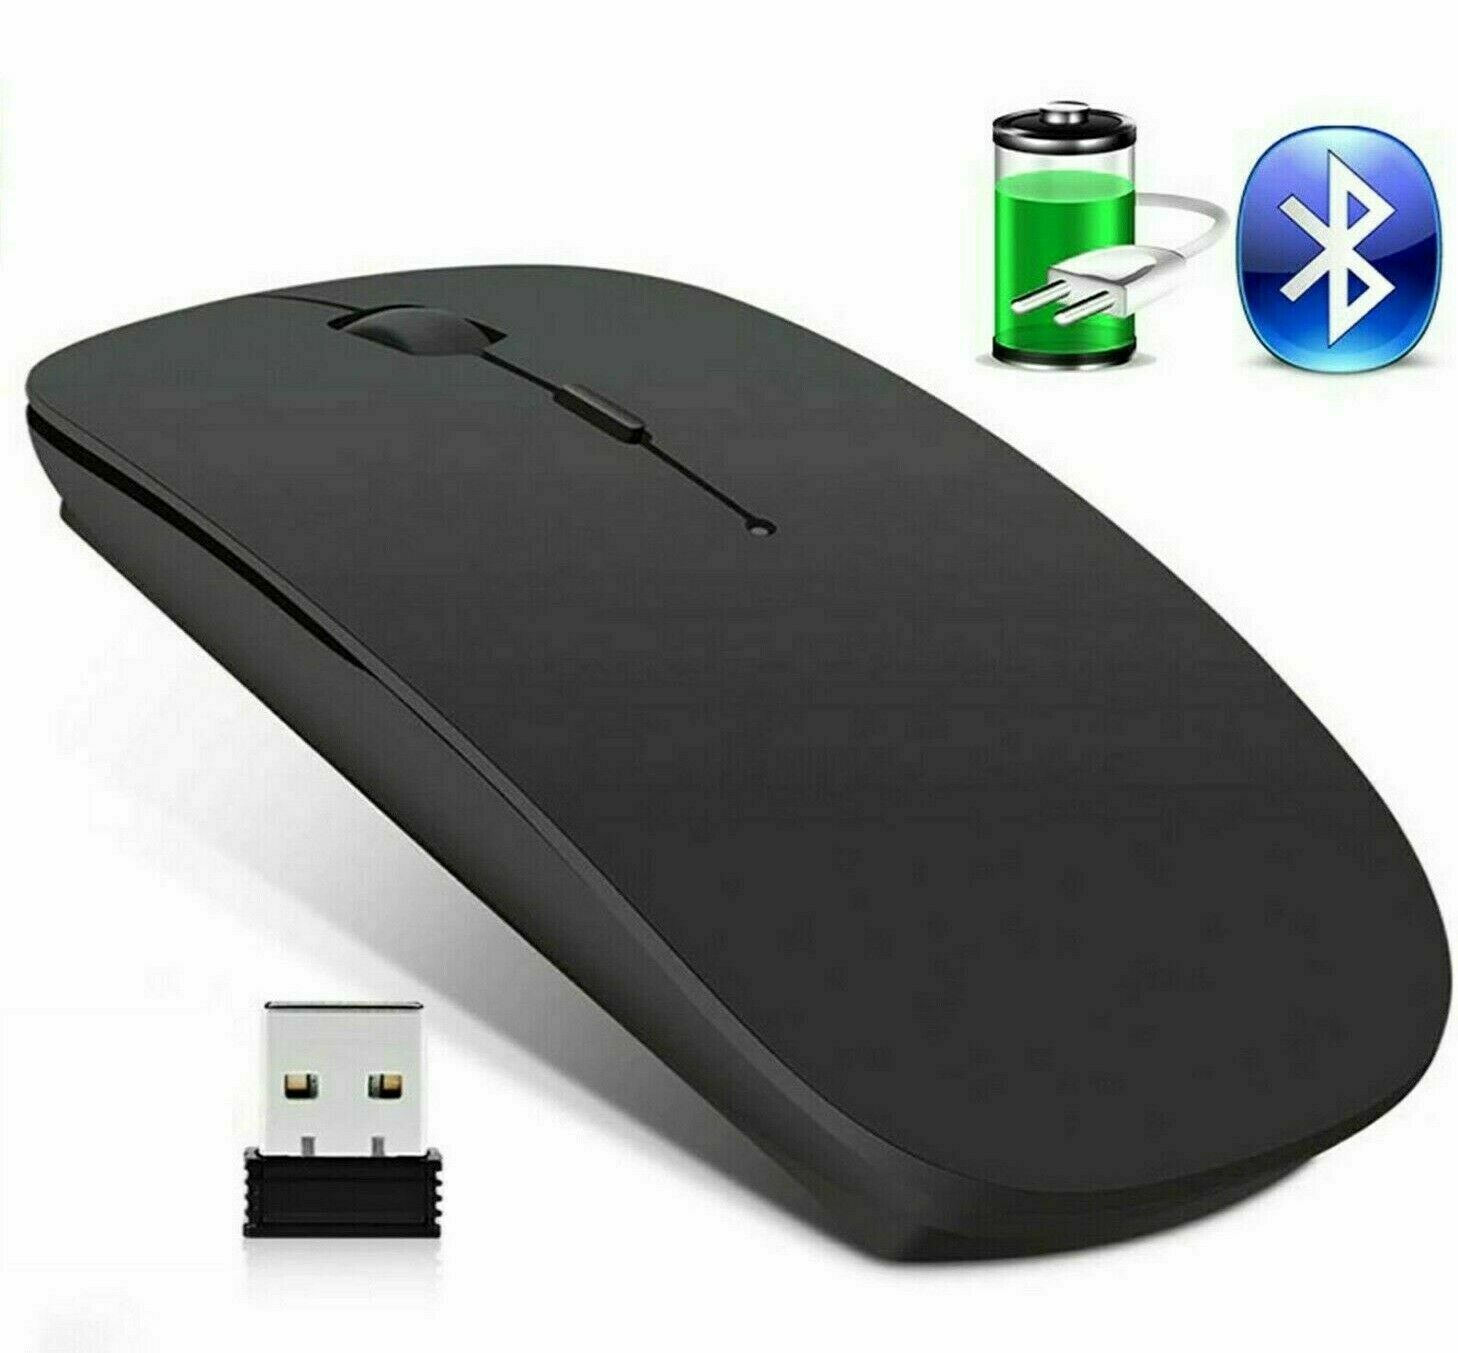 UK-PC-Mac-Laptop-iMac-Slim-24-GHz-USB-Optical-Wireless-Cordless-Scroll-Mouse-254363572567.jpg